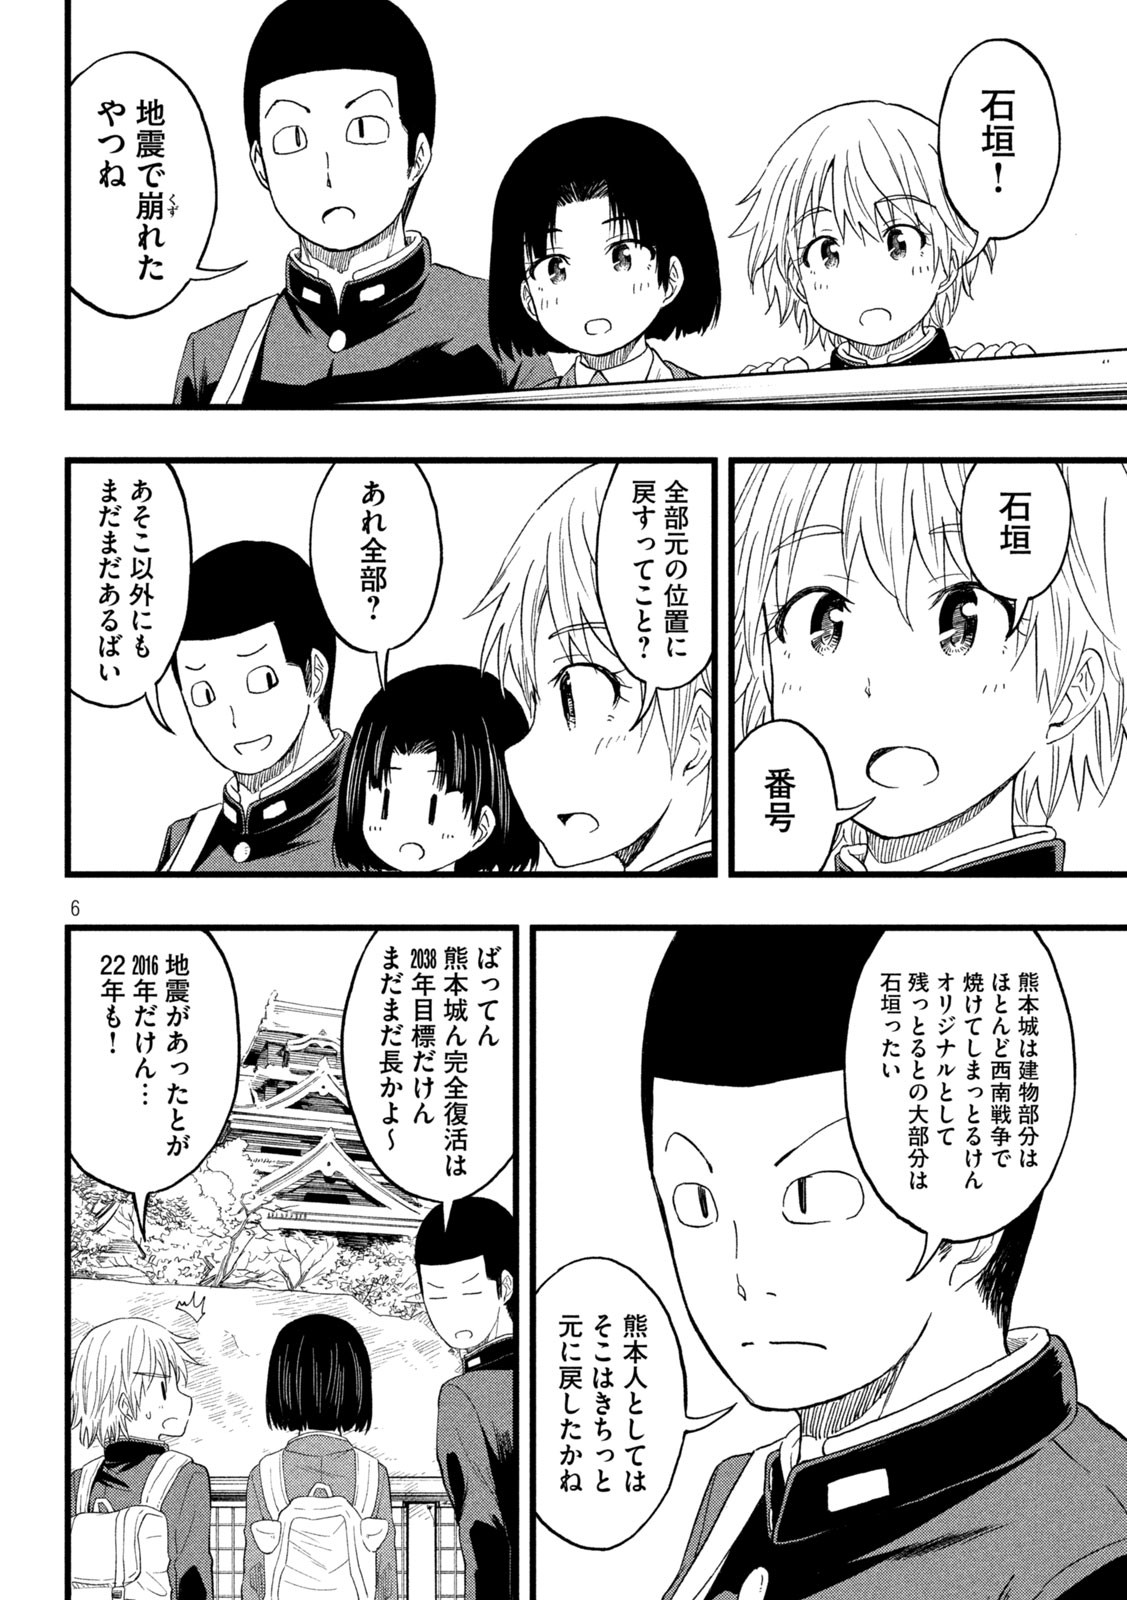 Koharu haru! - Chapter 74 - Page 2